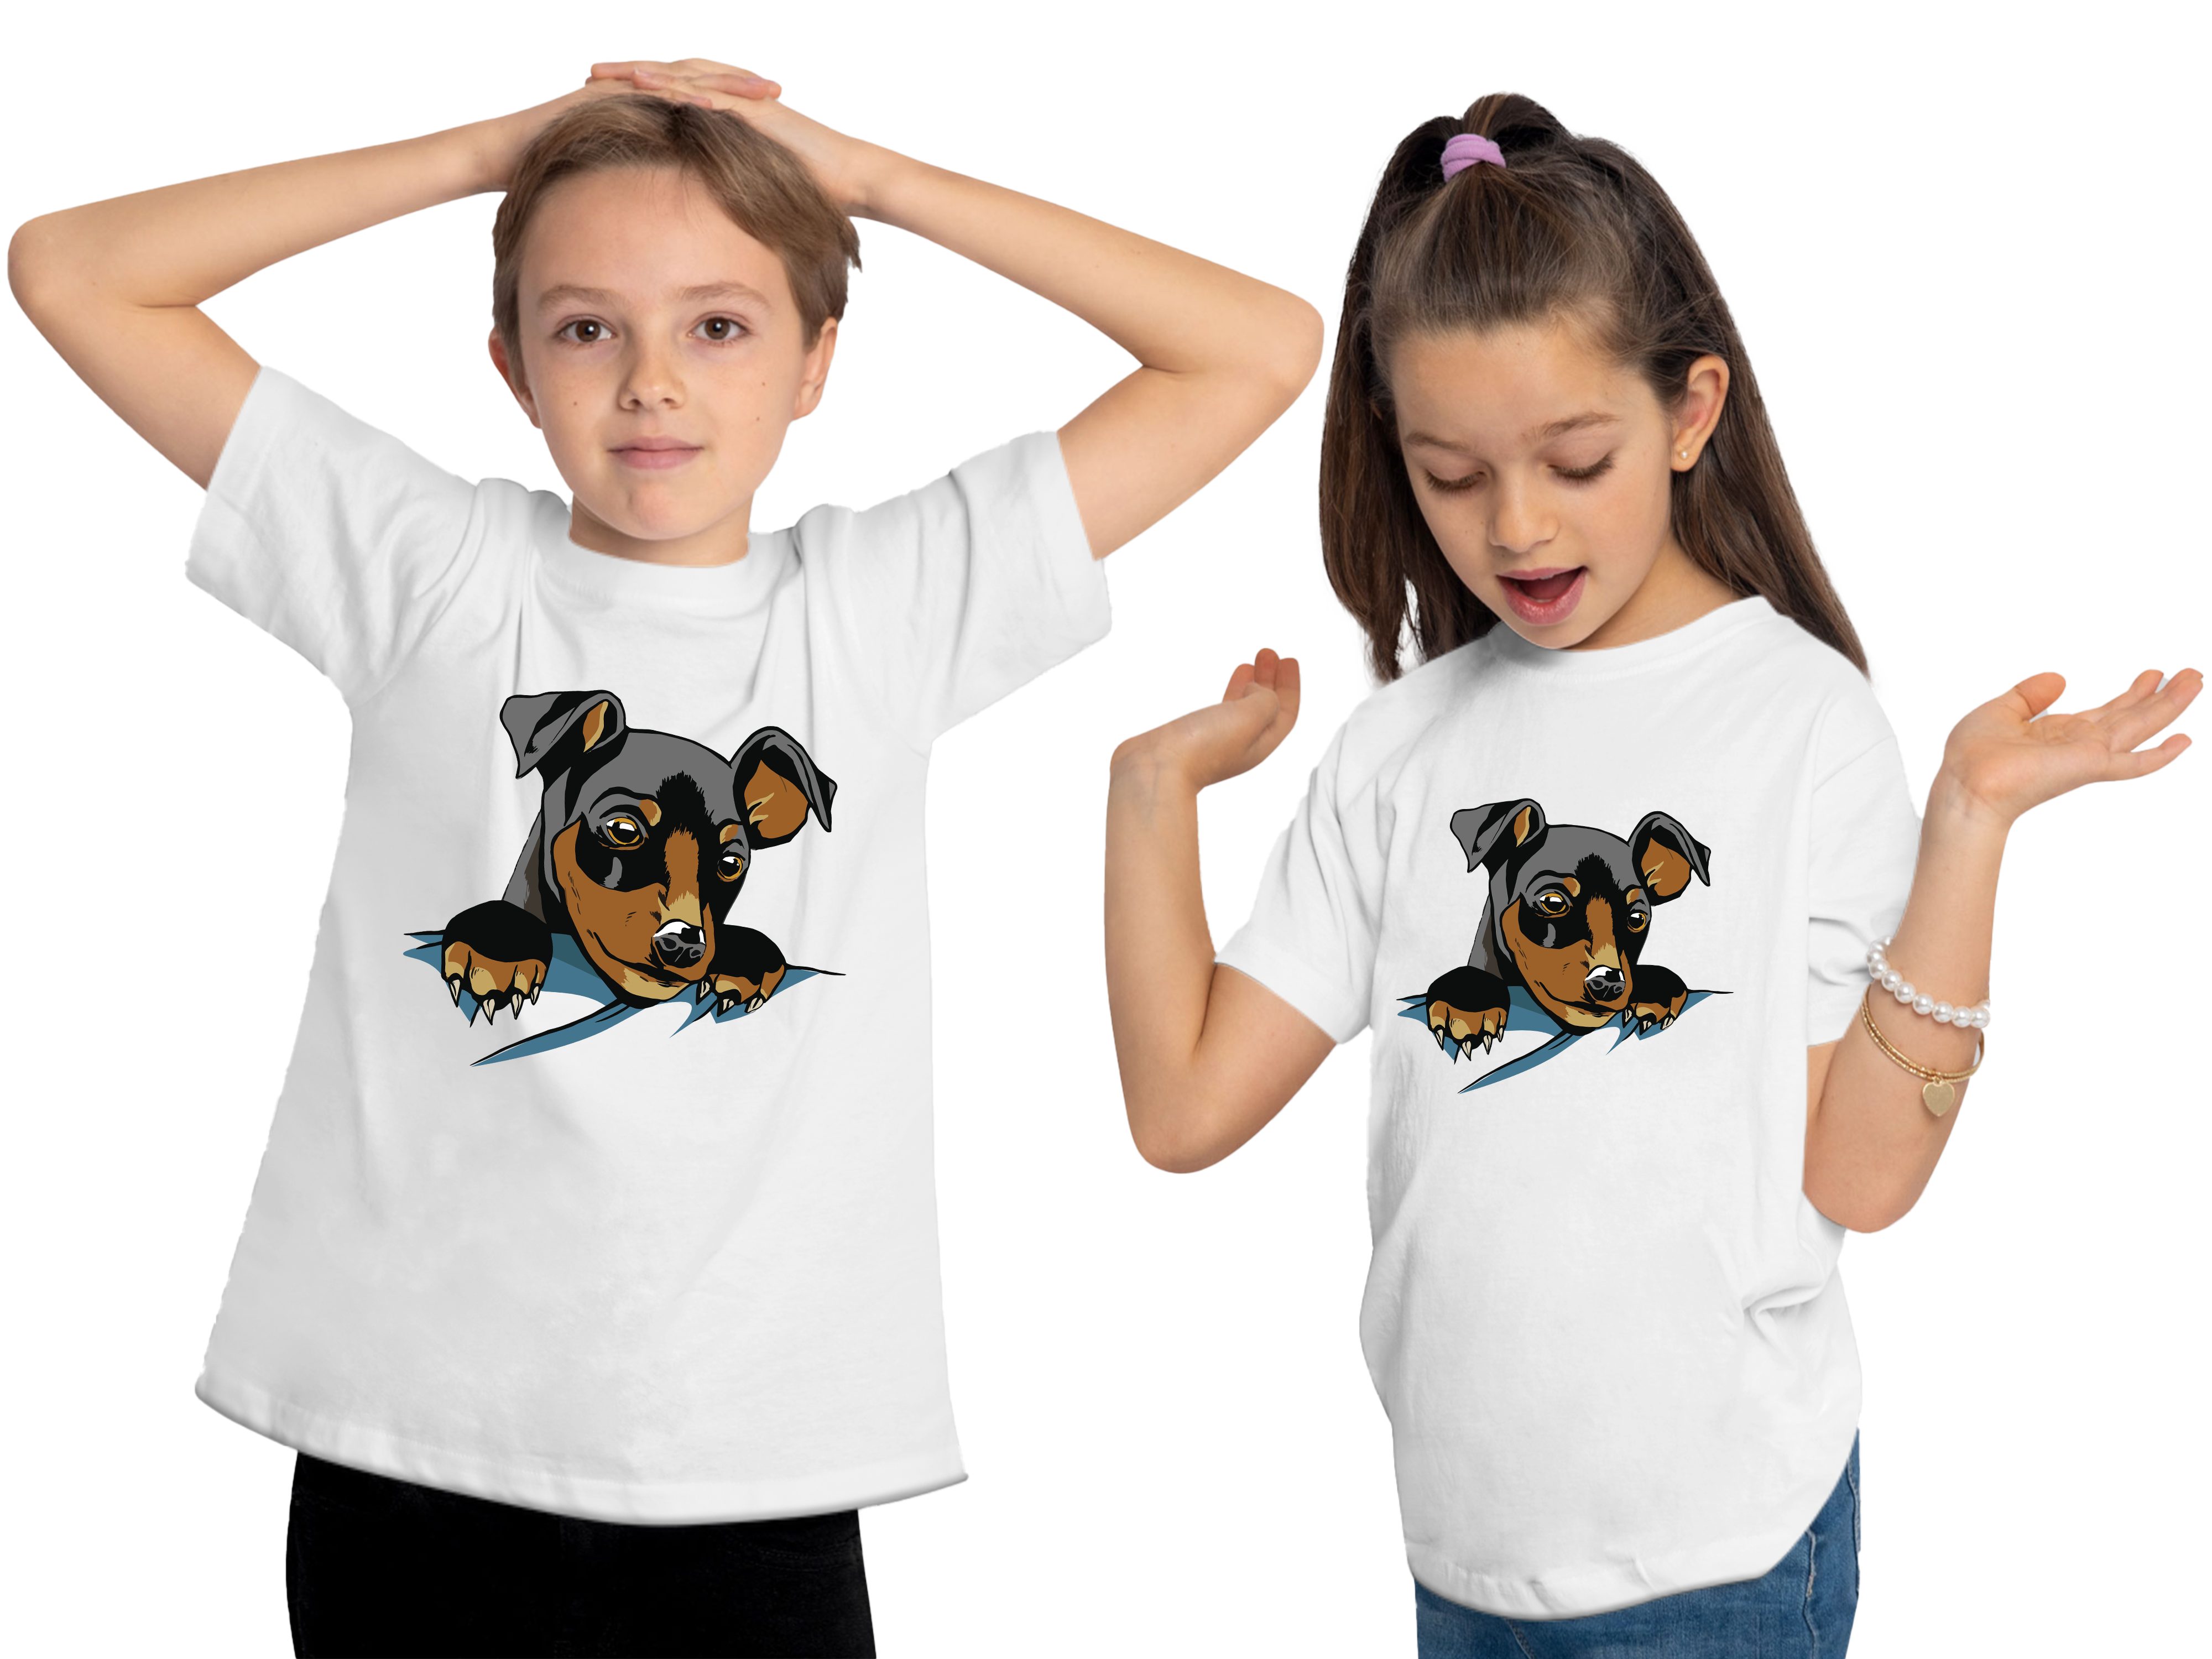 Kinder MyDesign24 Aufdruck, Hunde T-Shirt i227 weiss Welpe Baumwollshirt bedrucktes mit Süßer Print-Shirt -